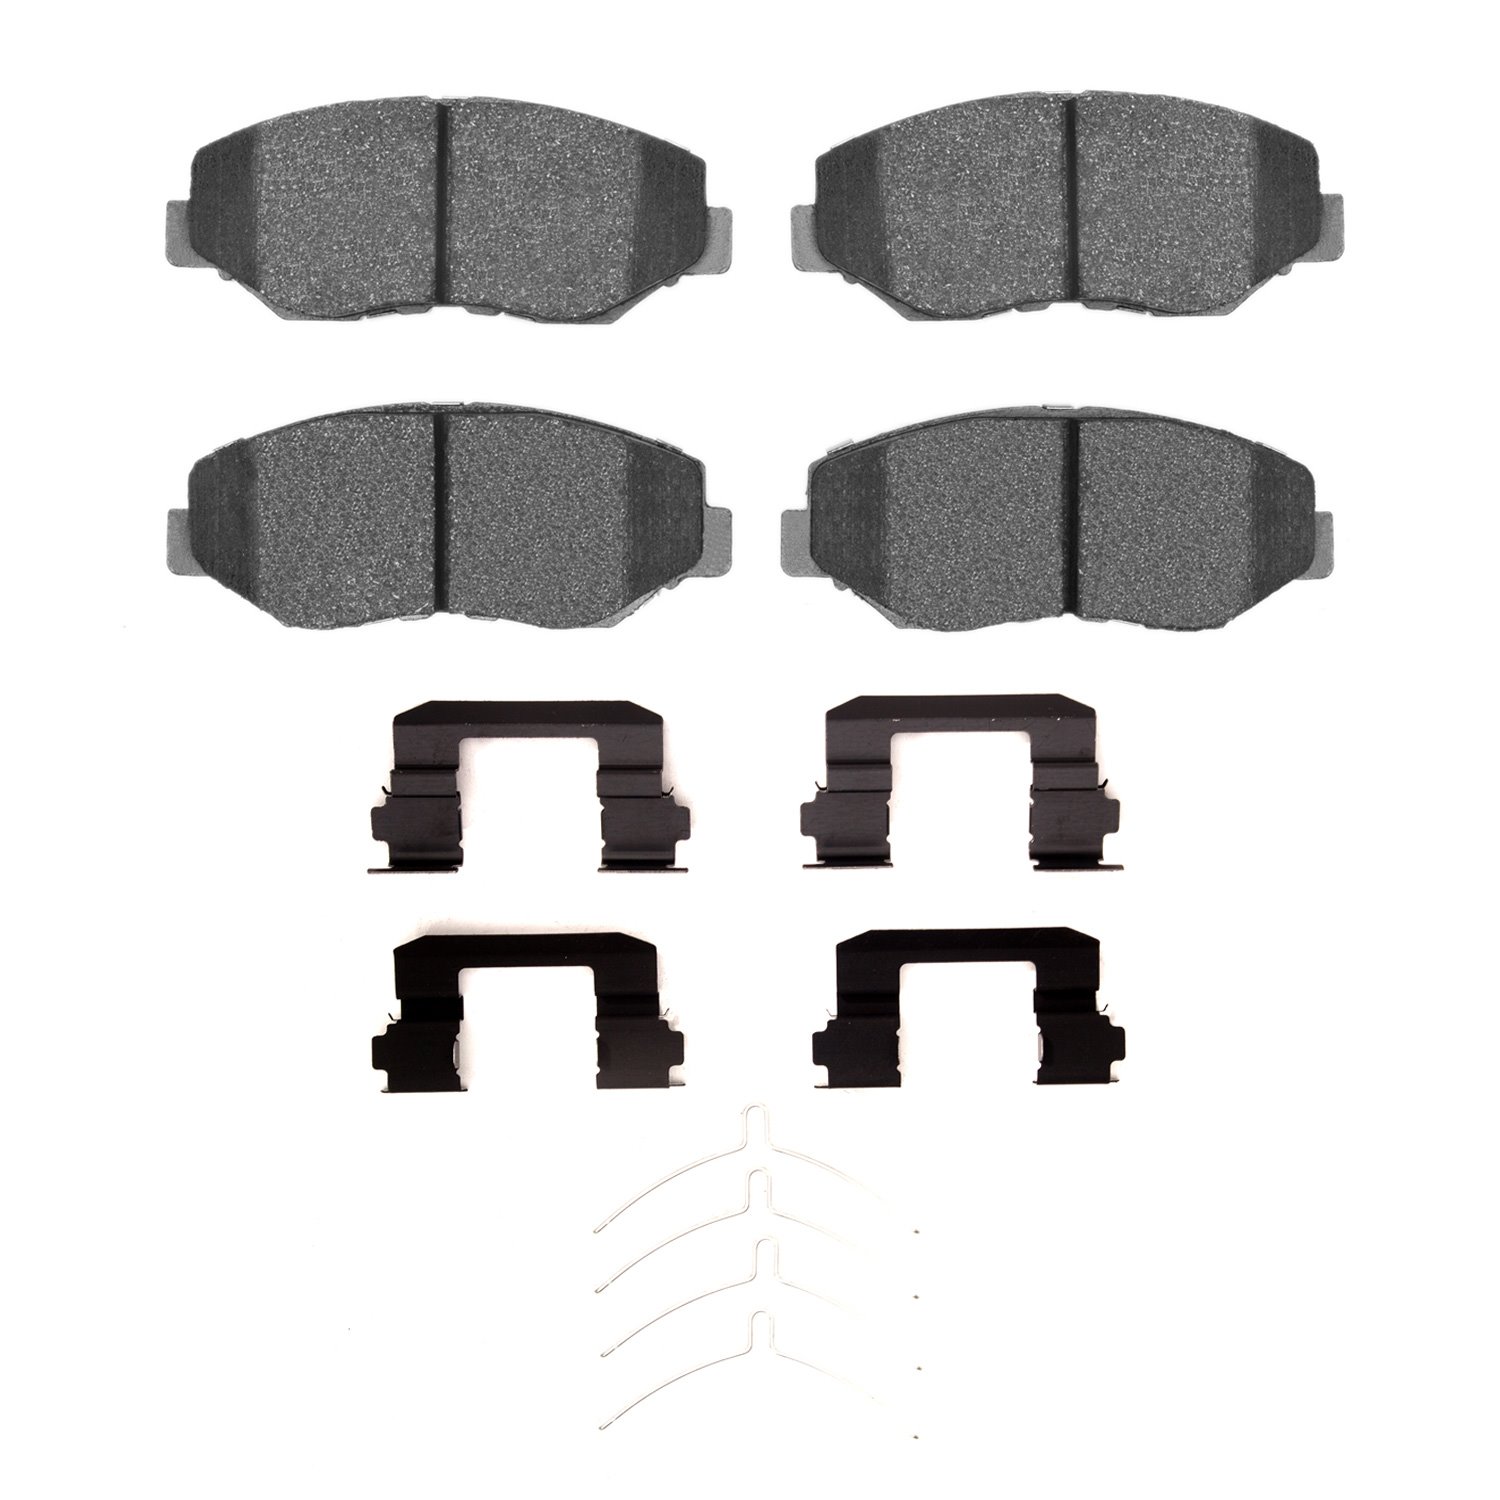 1310-0914-02 3000-Series Ceramic Brake Pads & Hardware Kit, 2003-2008 Acura/Honda, Position: Front